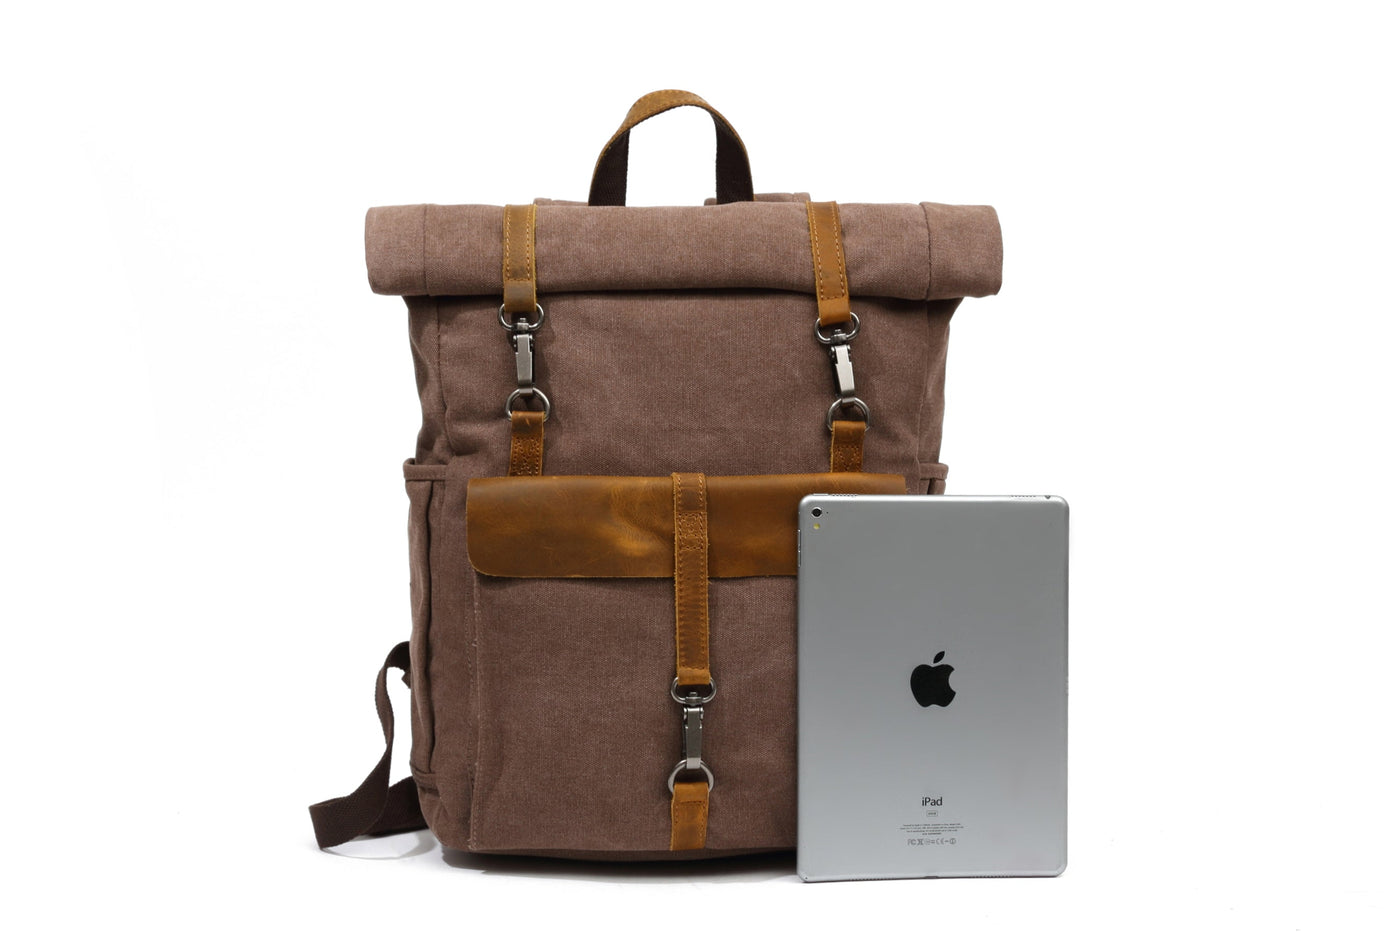 Clayton-canvas-backpack-trendyful